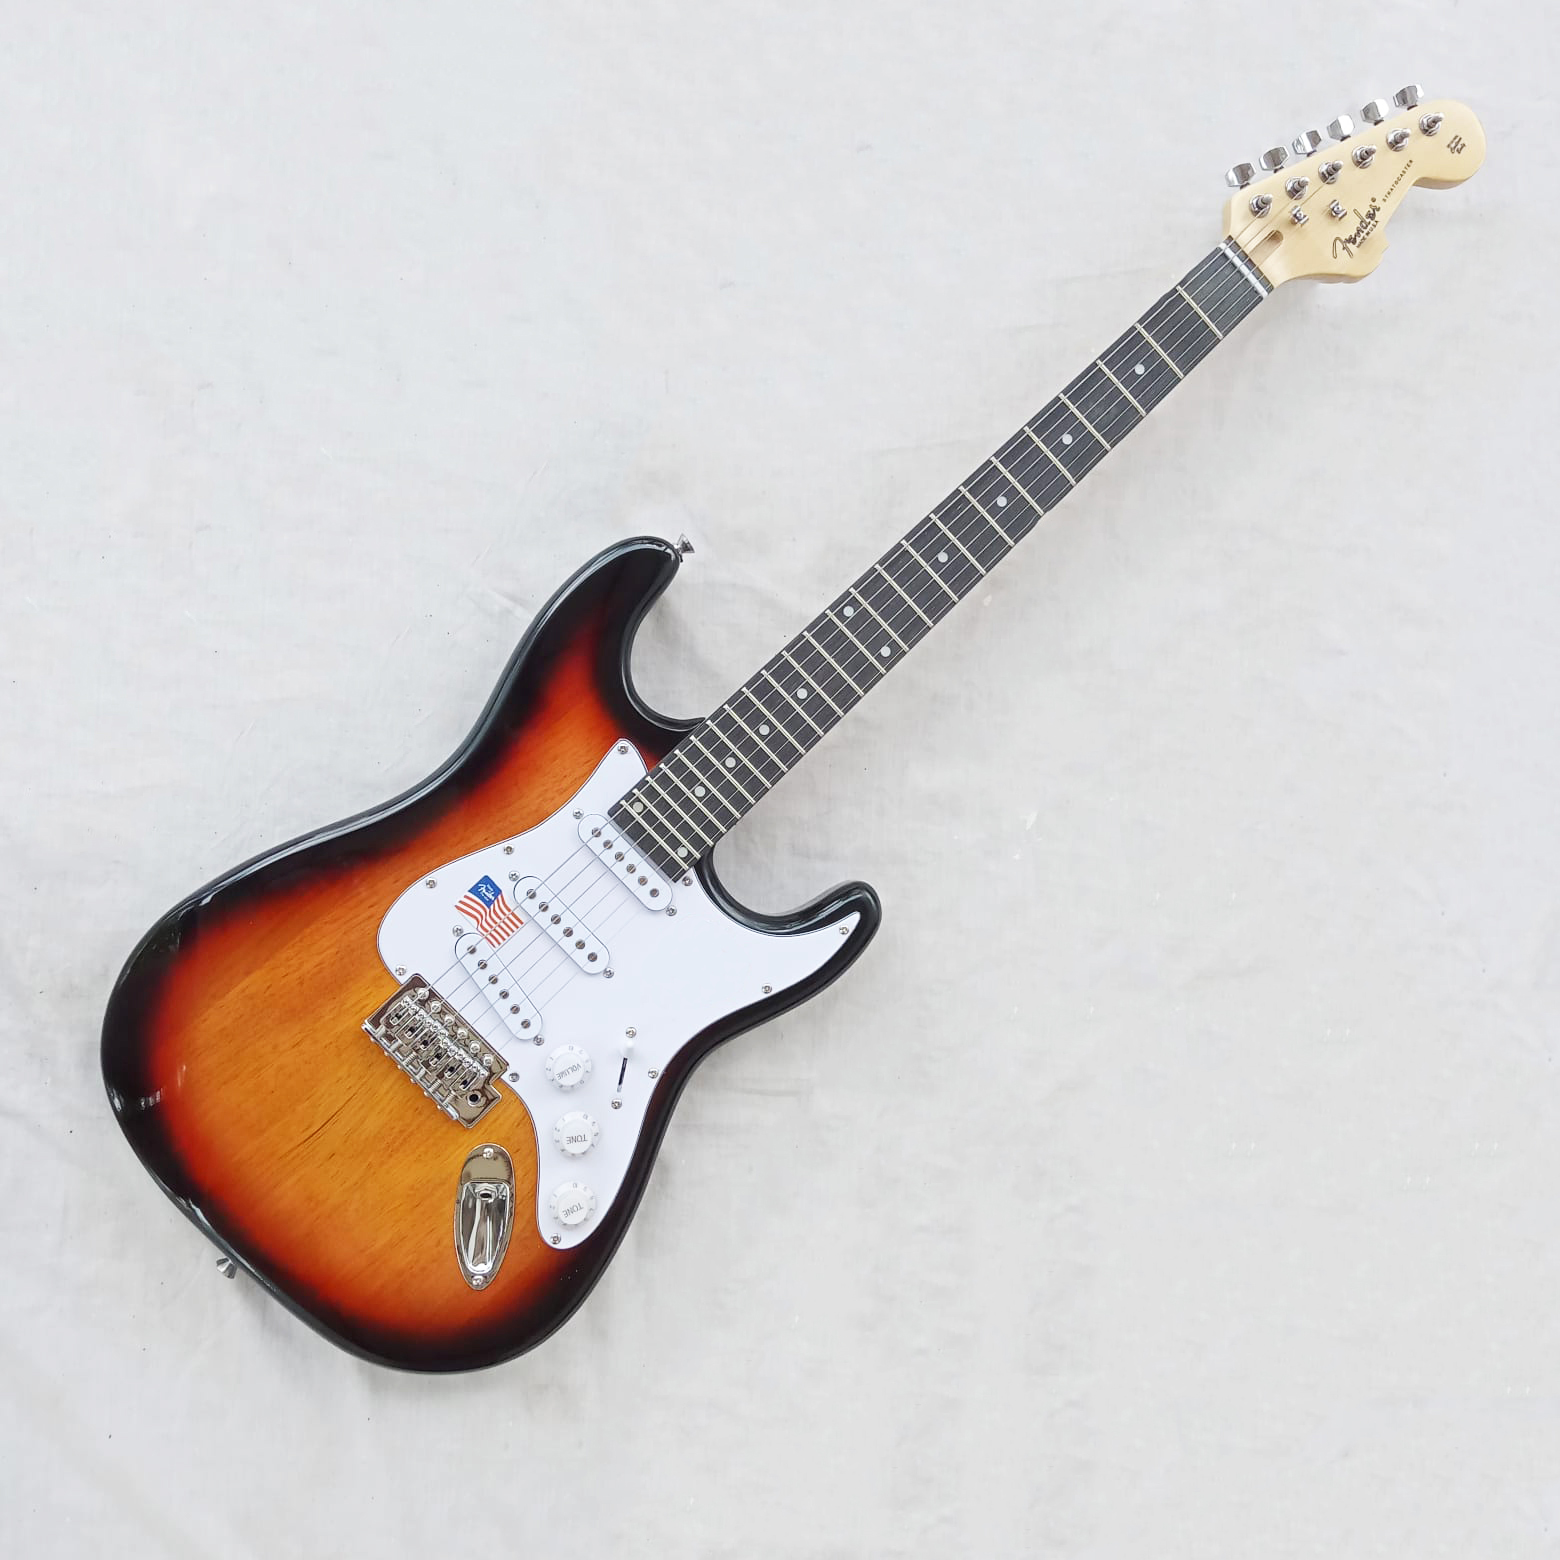 Fender Stratocaster Electric Guitars (American Standard)